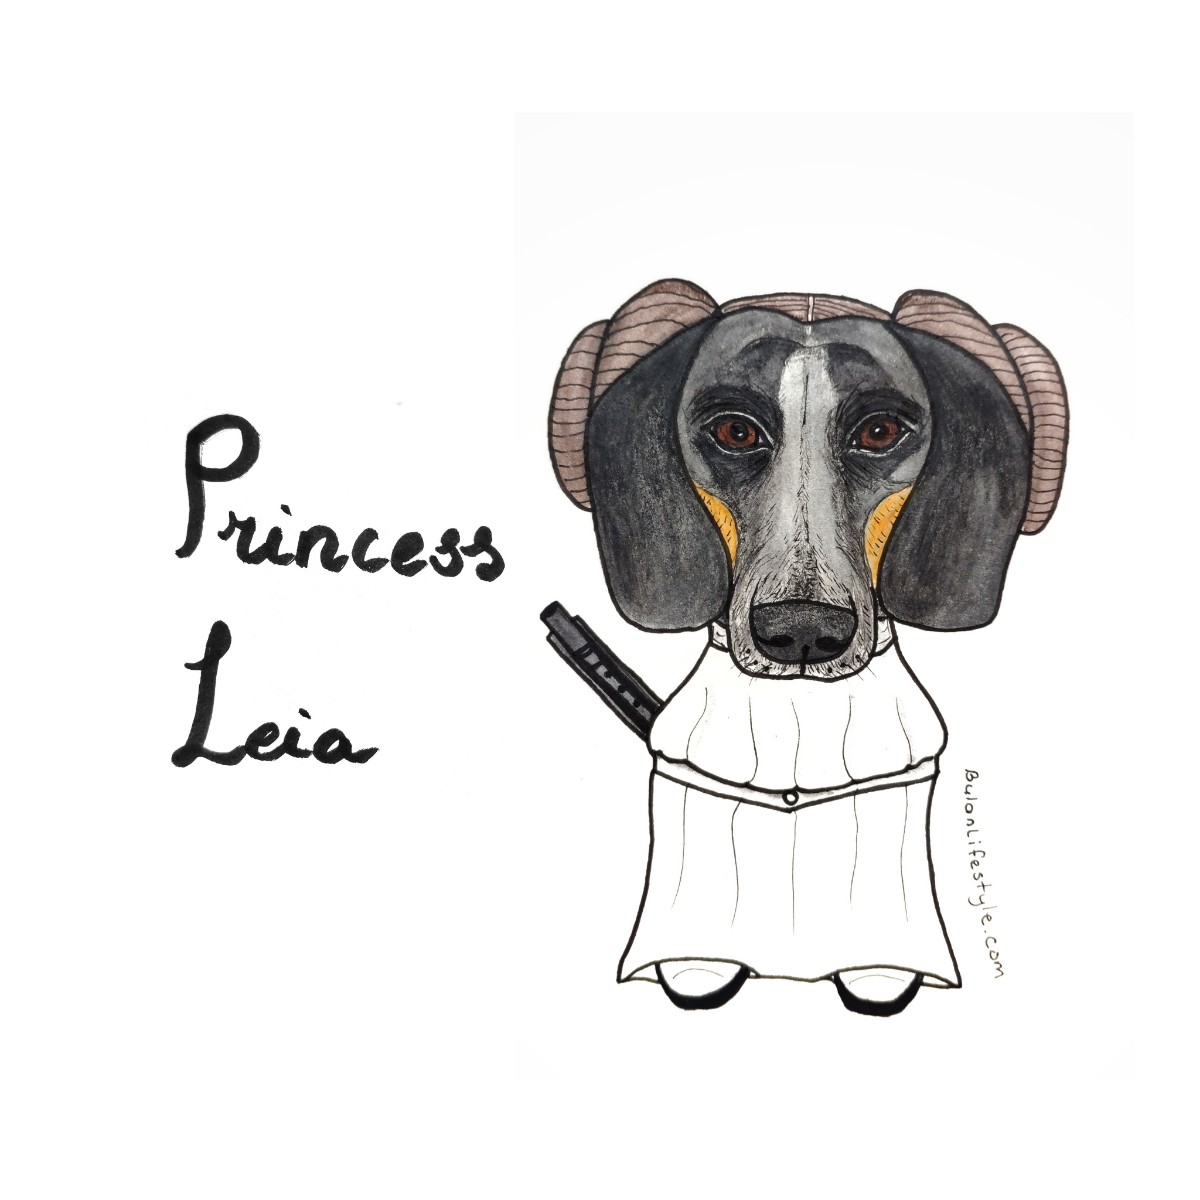 Princess Leia the sausage dog